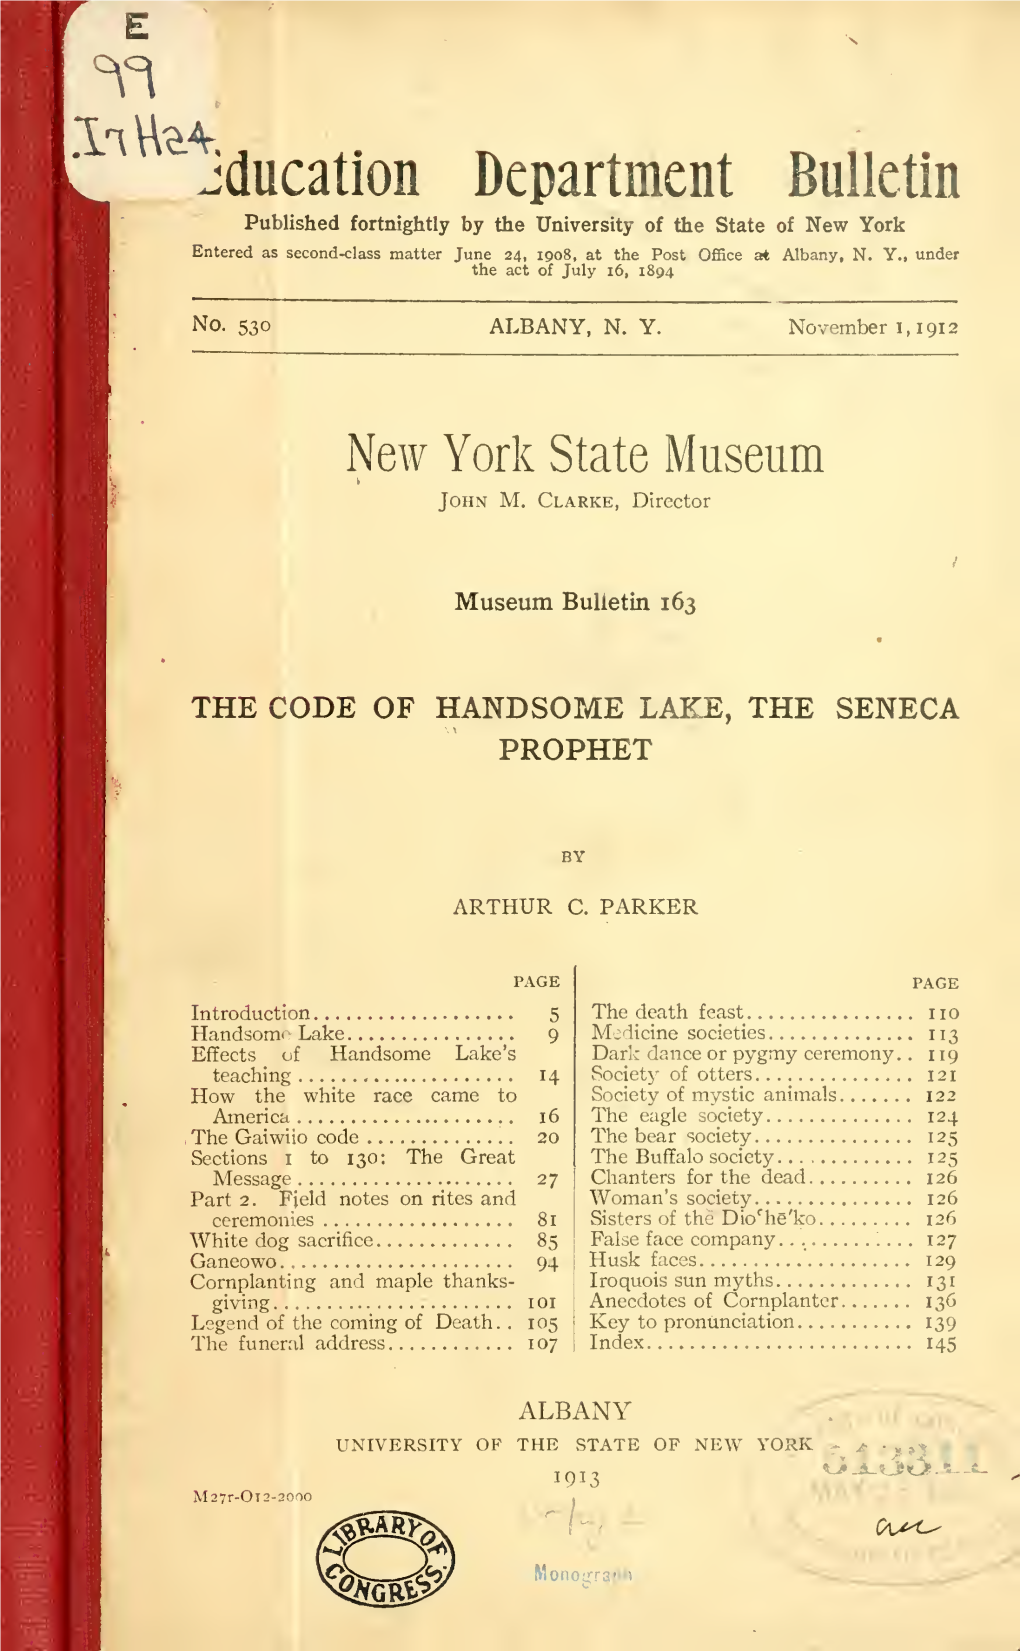 the Code of Handsome Lake, the Seneca Prophet